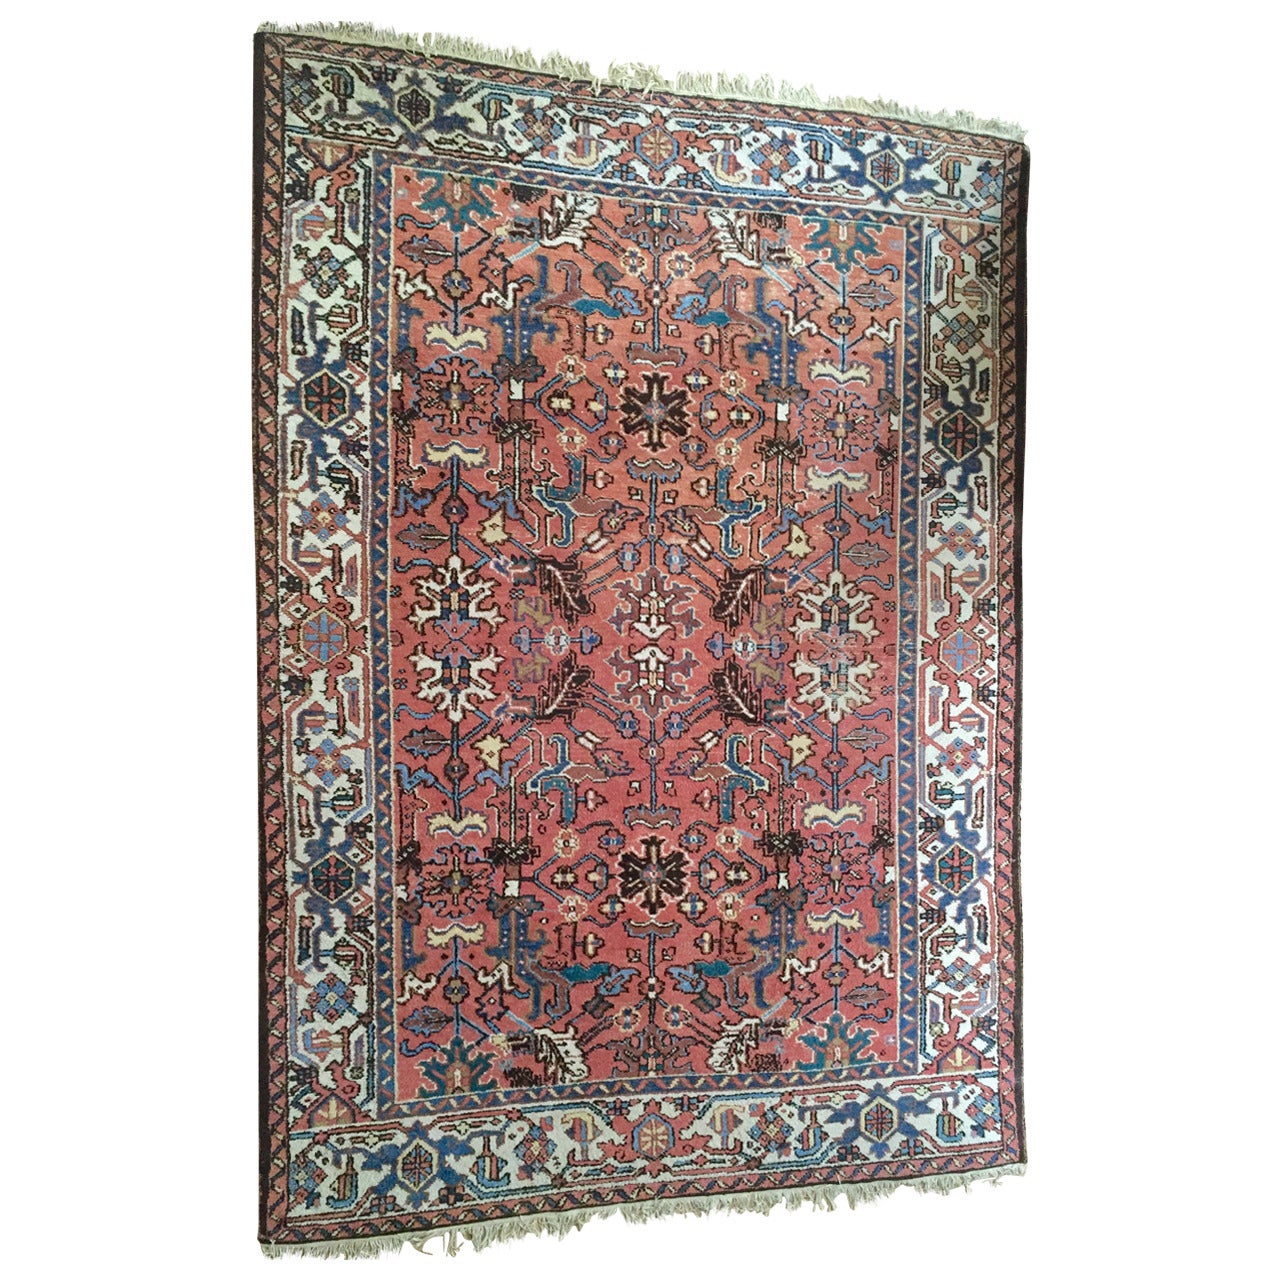 Lovely Semi-Antique Peach Color Persian Carpet